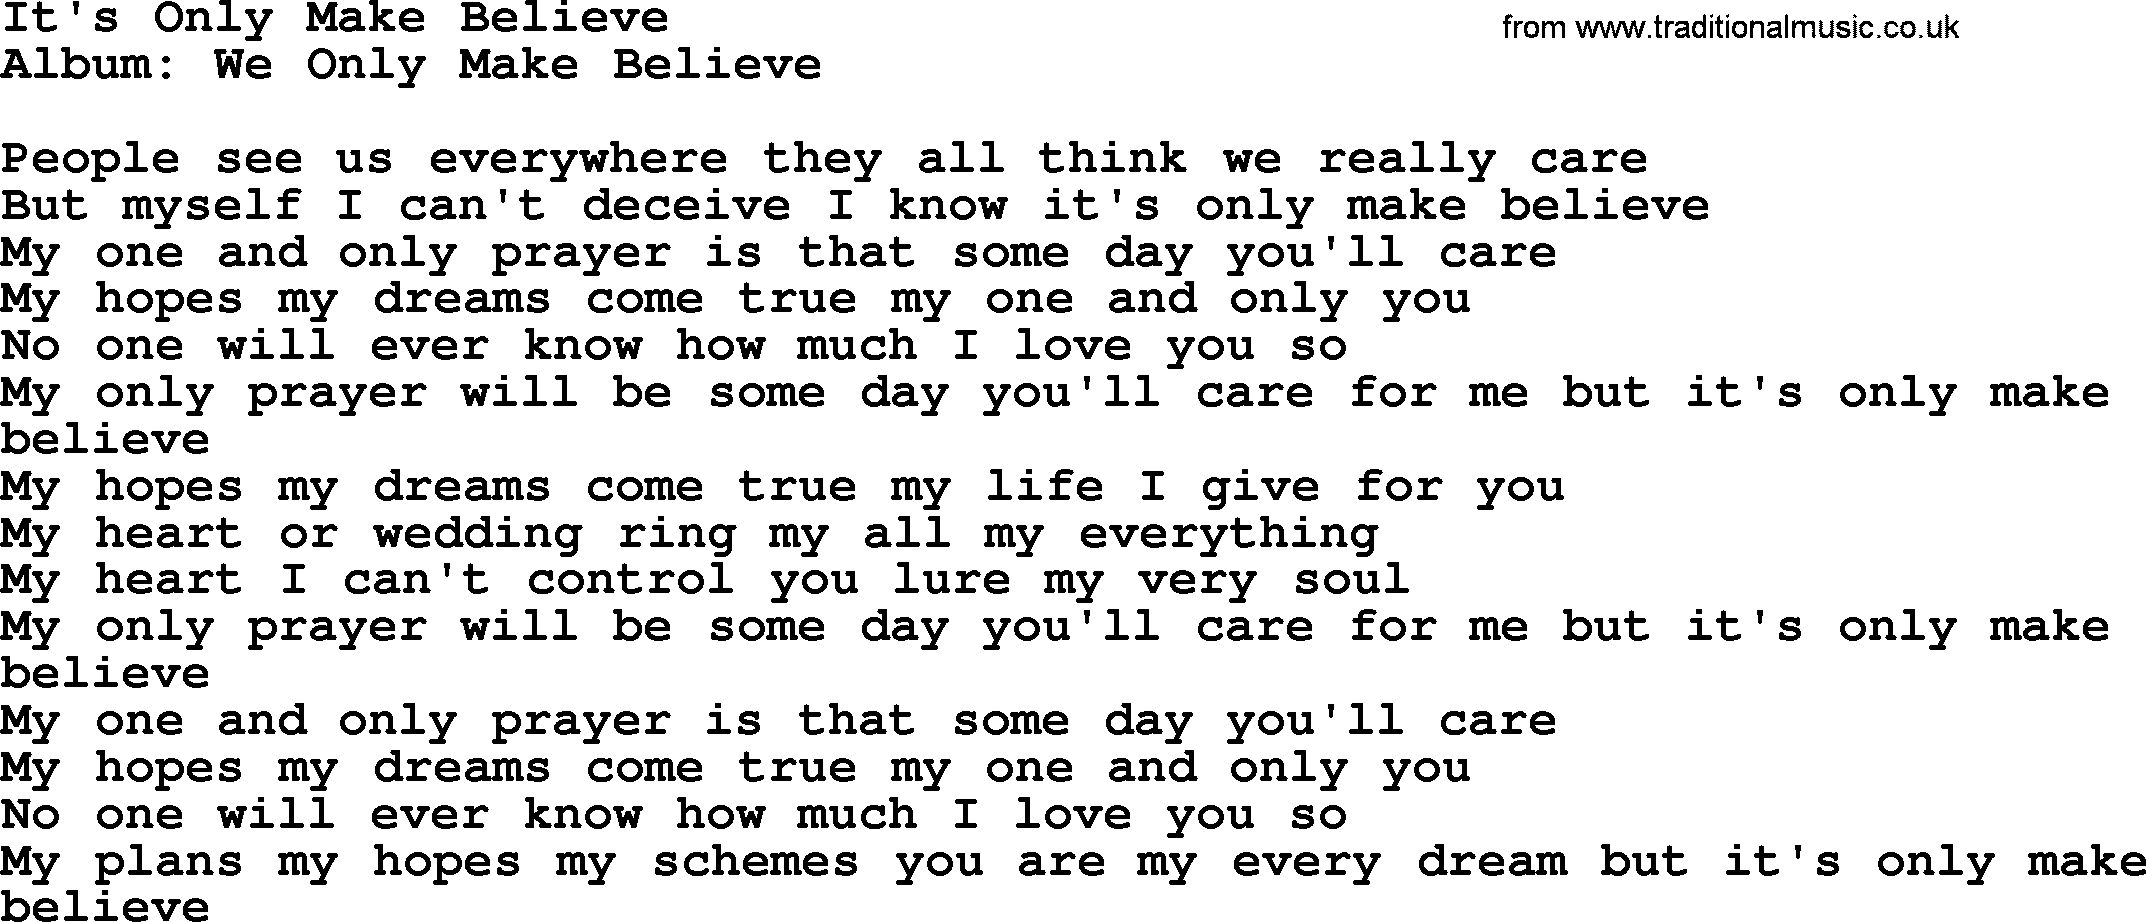 Loretta Lynn song: It's Only Make Believe lyrics